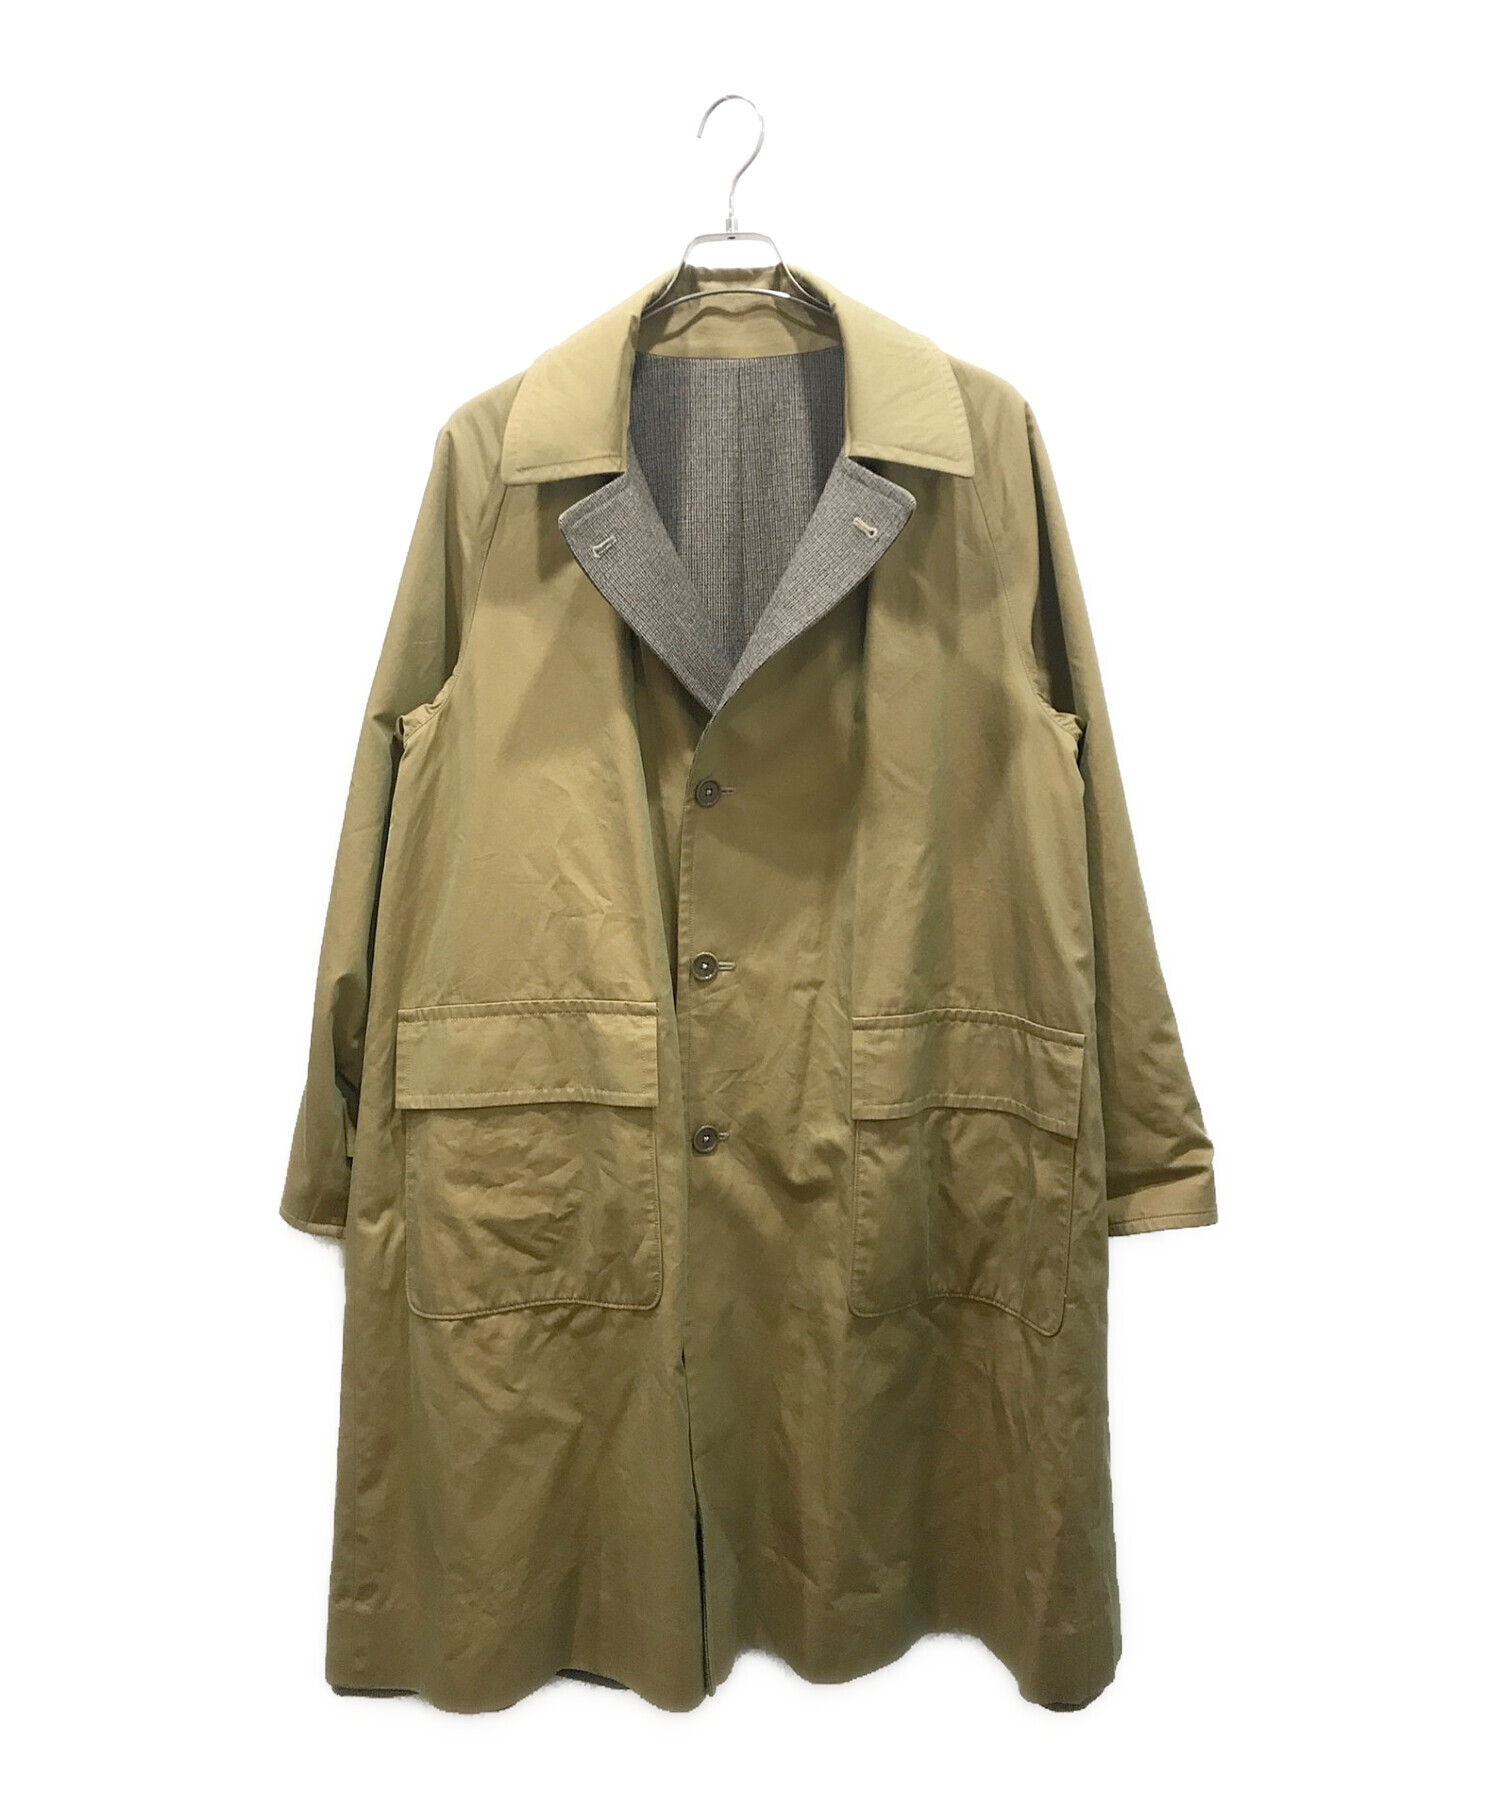 KAPTAIN SUNSHINE (キャプテンサンシャイン) Reversible Chesterfield Coat ベージュ×ブラウン サイズ:38